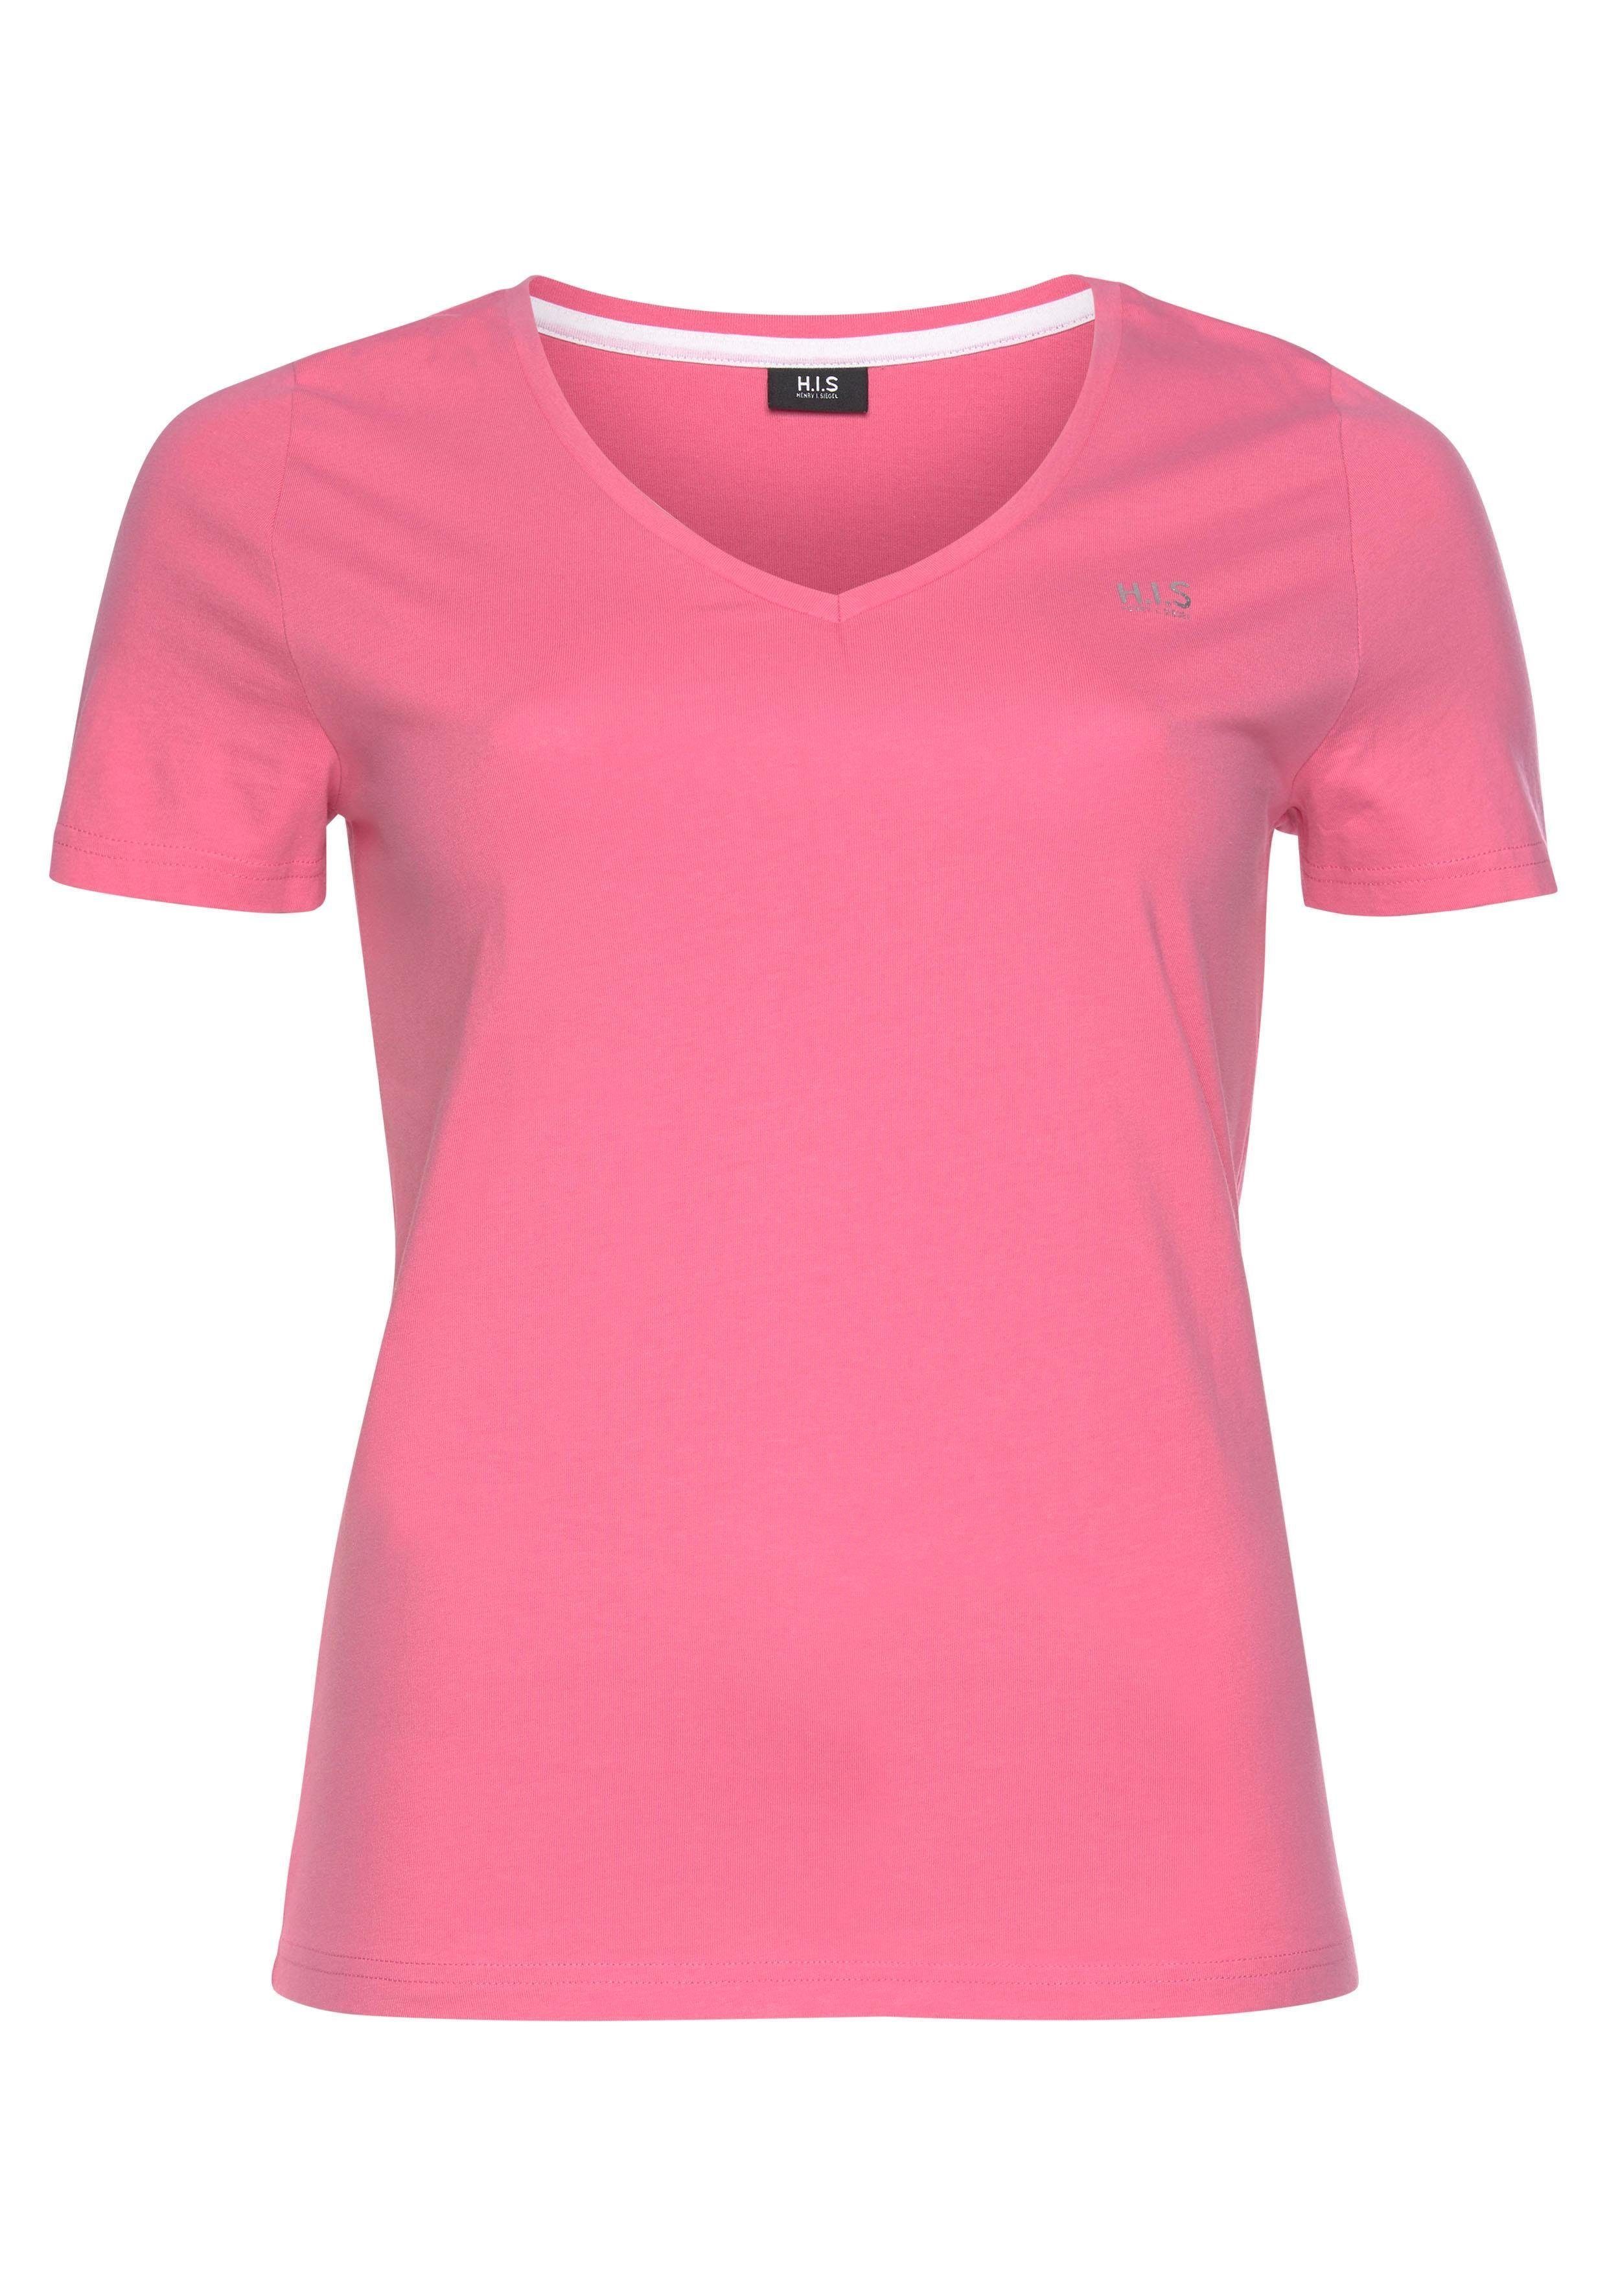 3er-Pack) Essential-Basics schwarz, H.I.S (Spar-Set, Große rauchblau Größen pink, T-Shirt